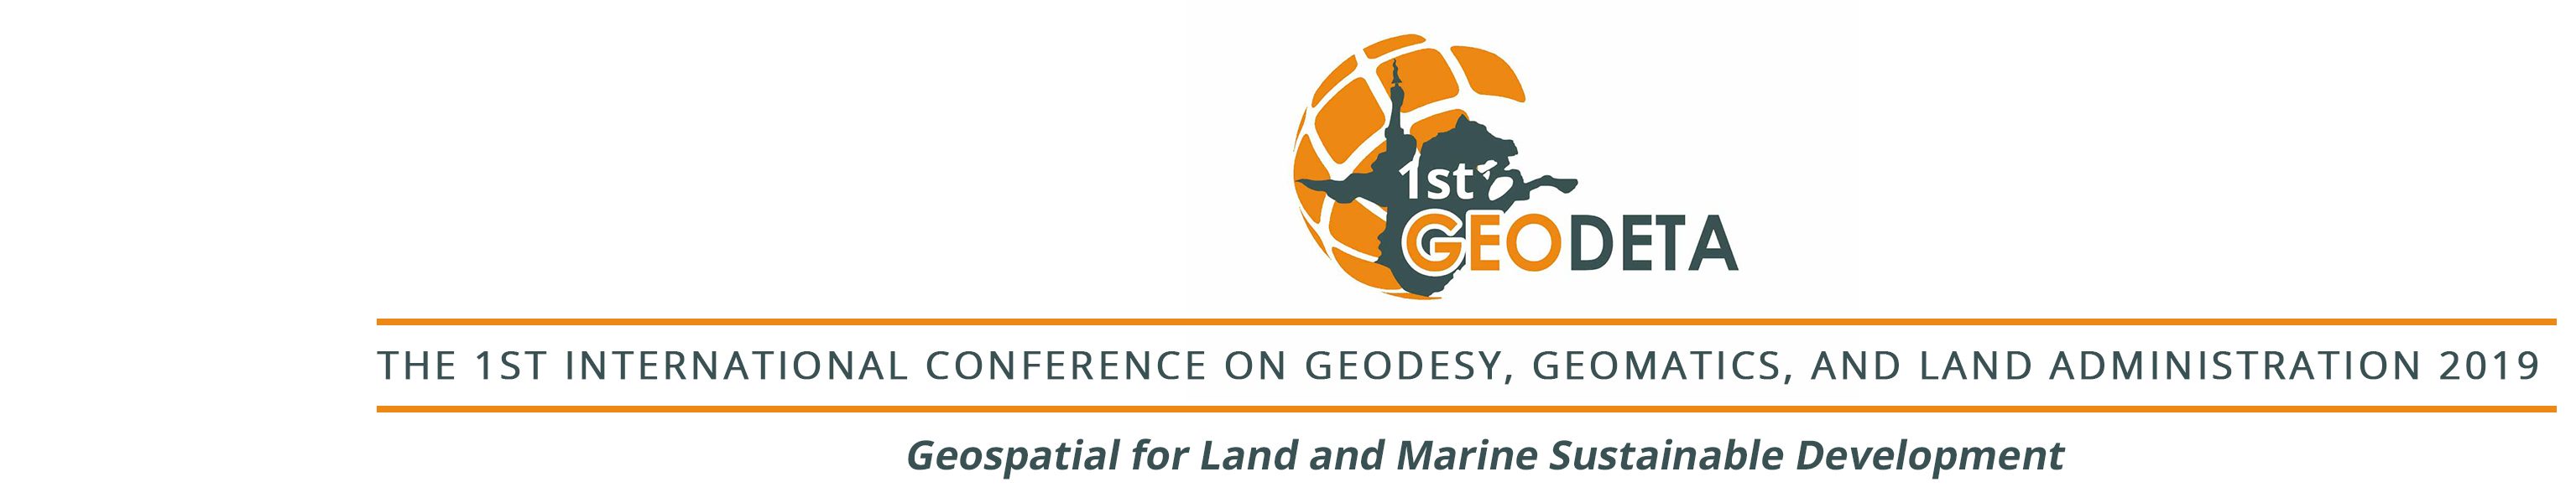 1st Geodeta 2019